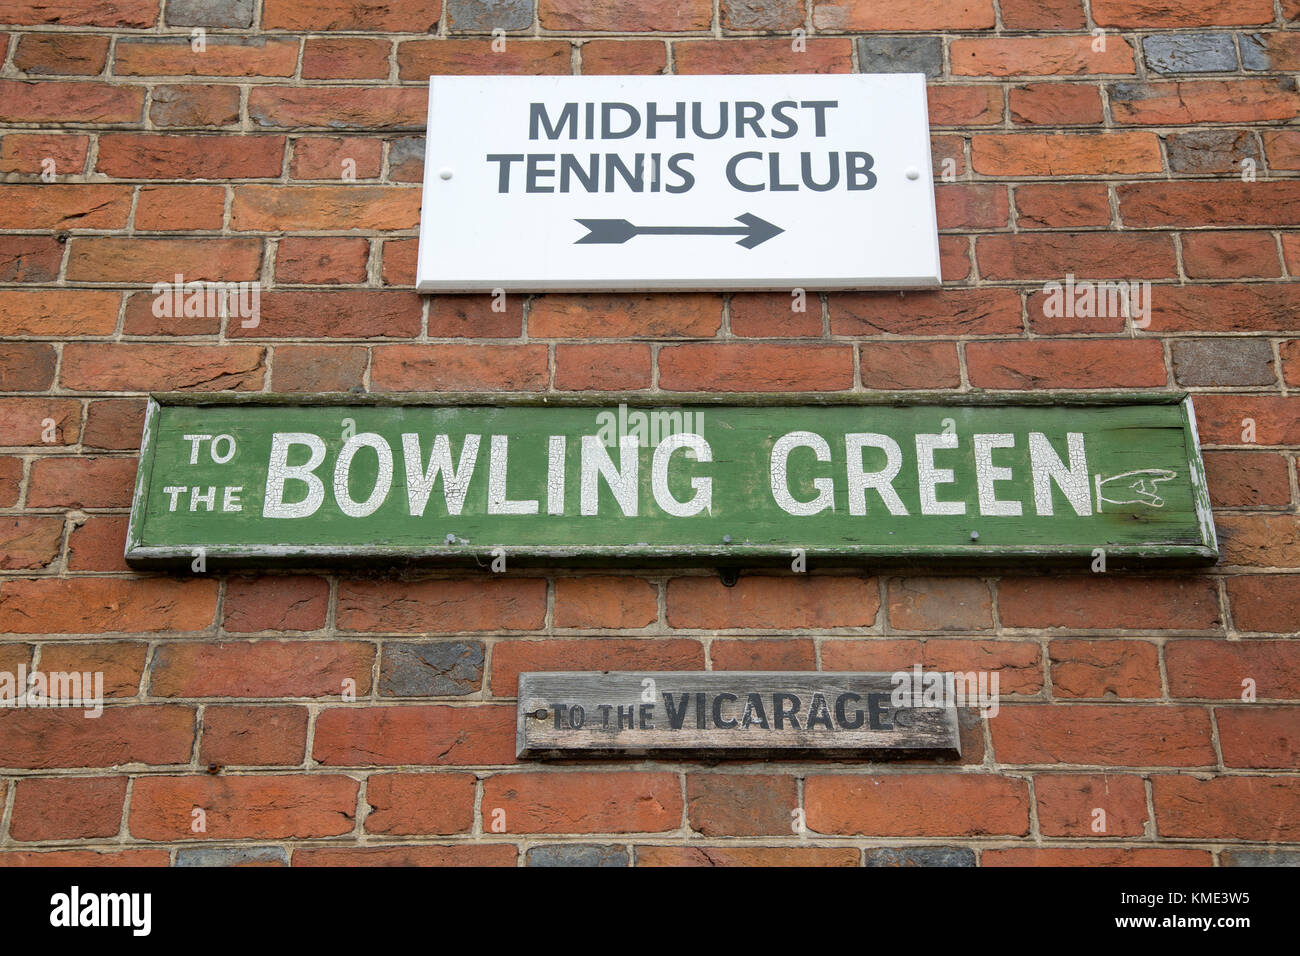 Midhurst Tennis Club and Bowling Green, UK Stock Photo